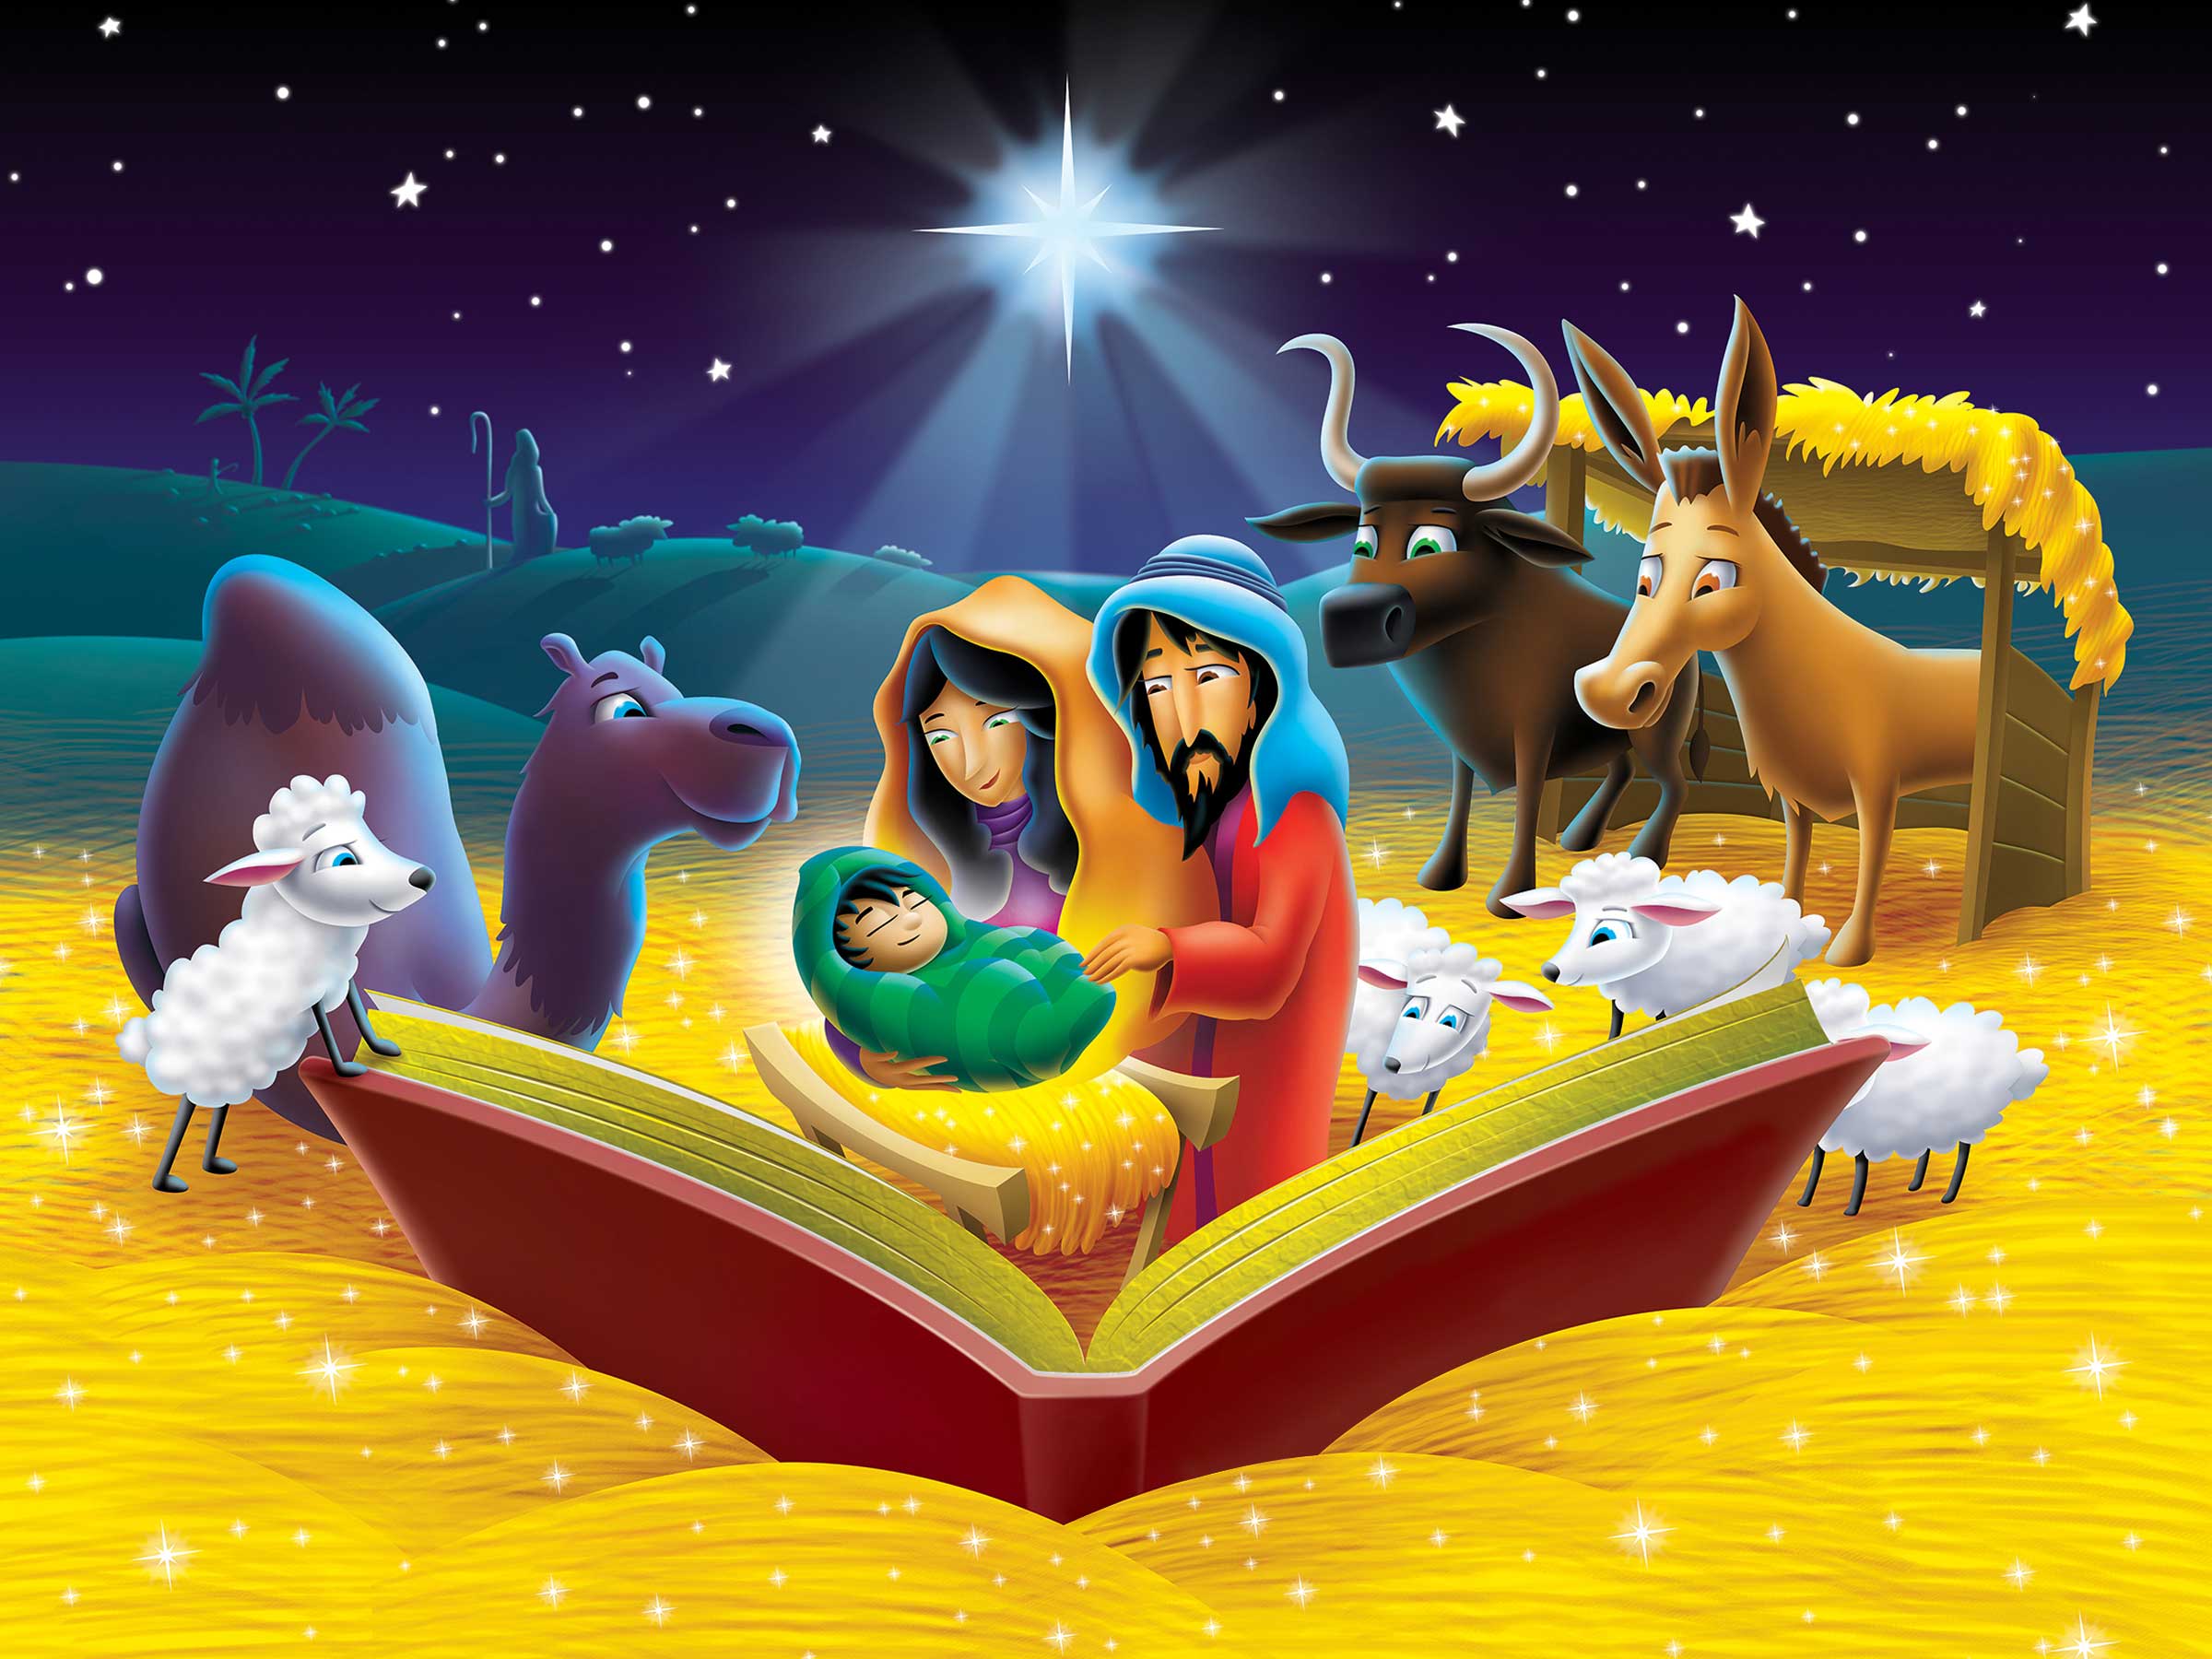 Dave_Titus_Illustrations_Nativity